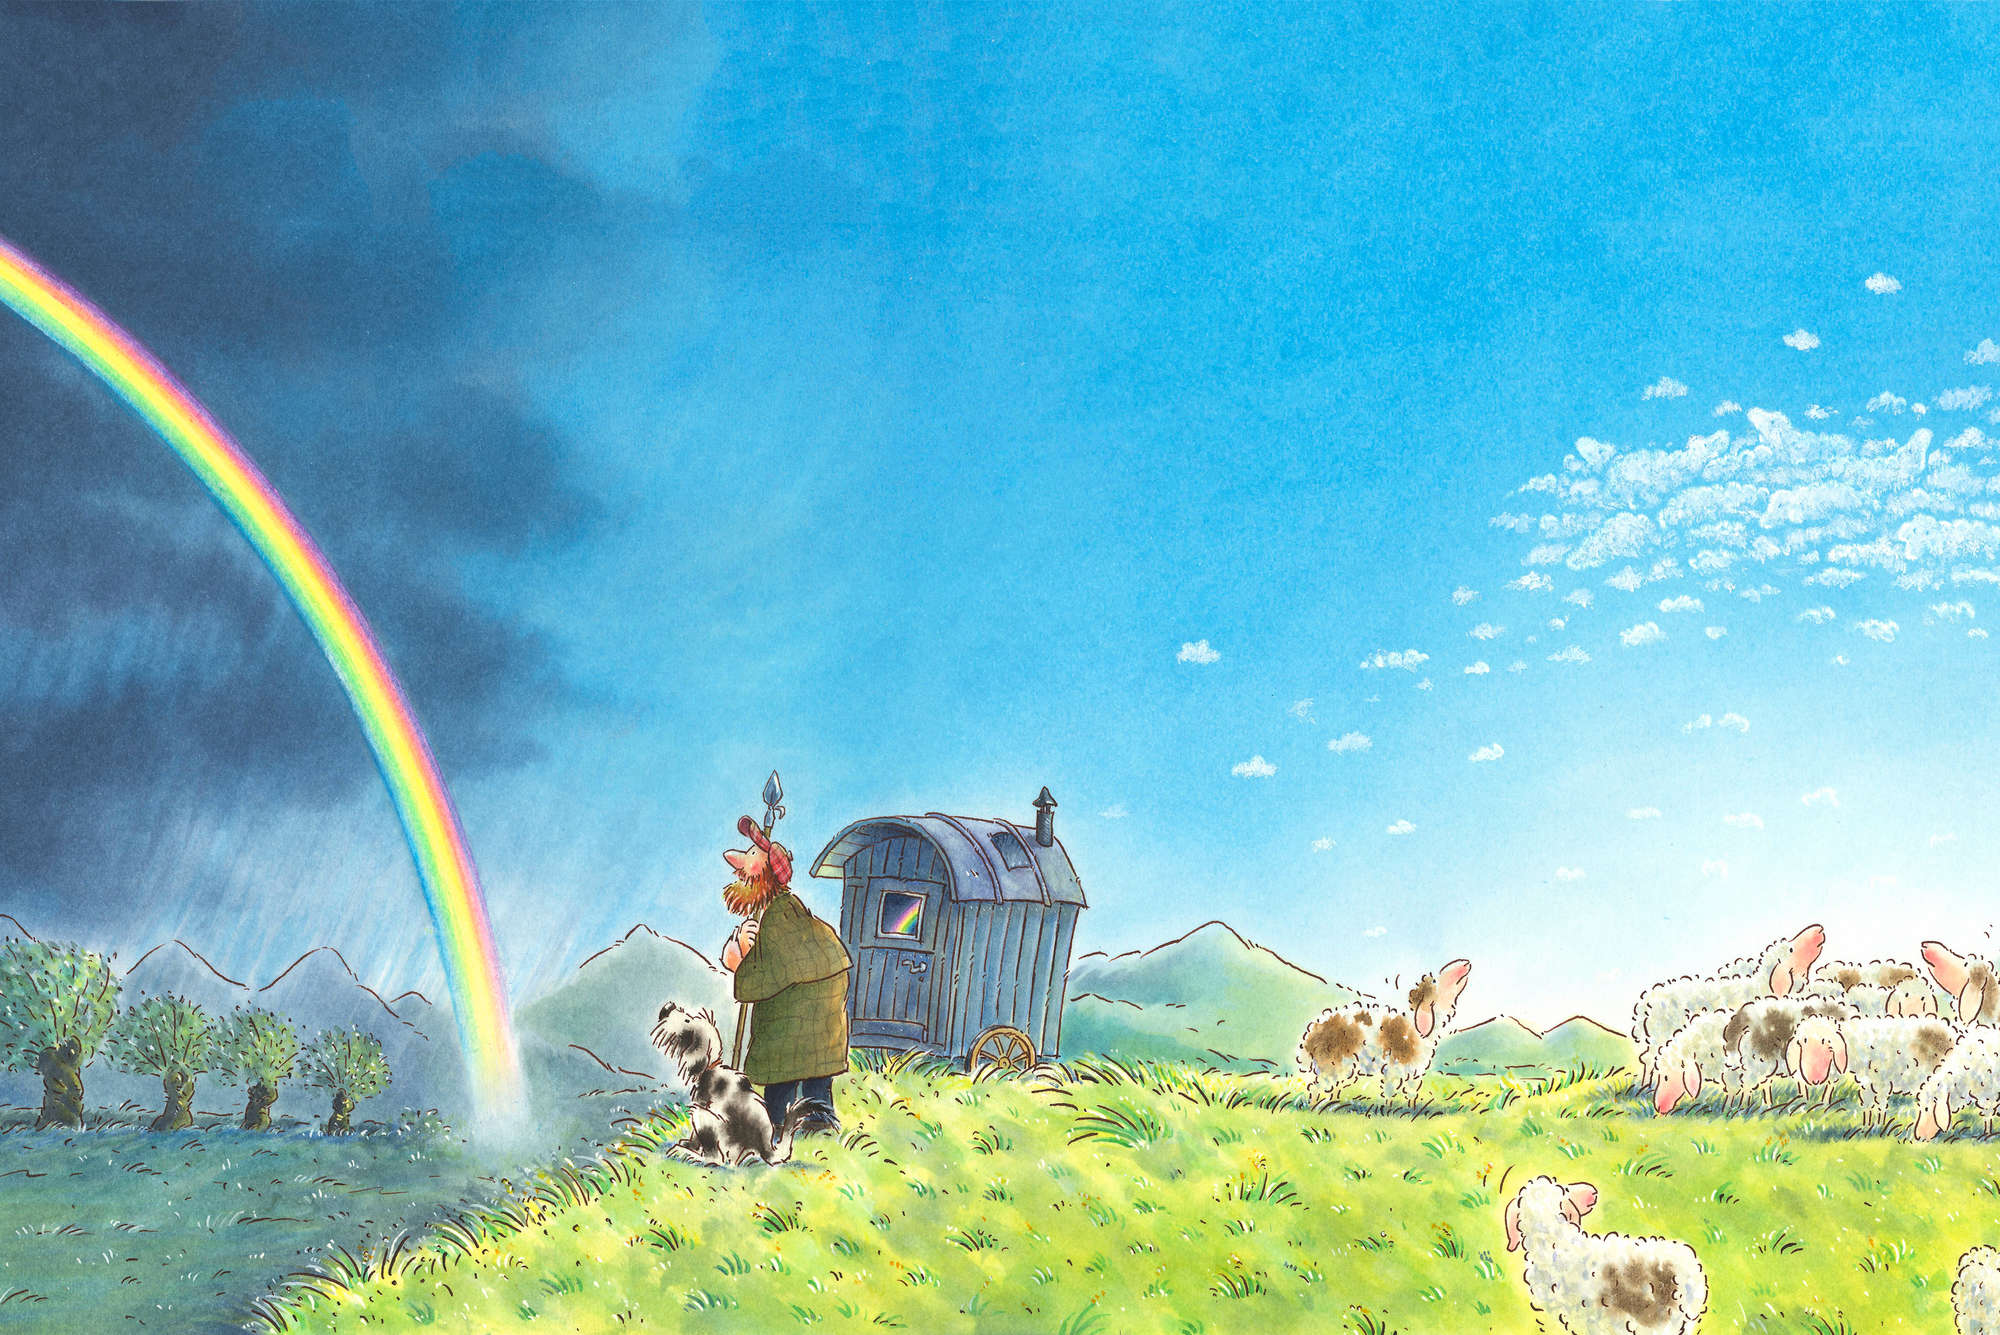             Children mural shepherd with dog and rainbow on premium smooth vinyl
        